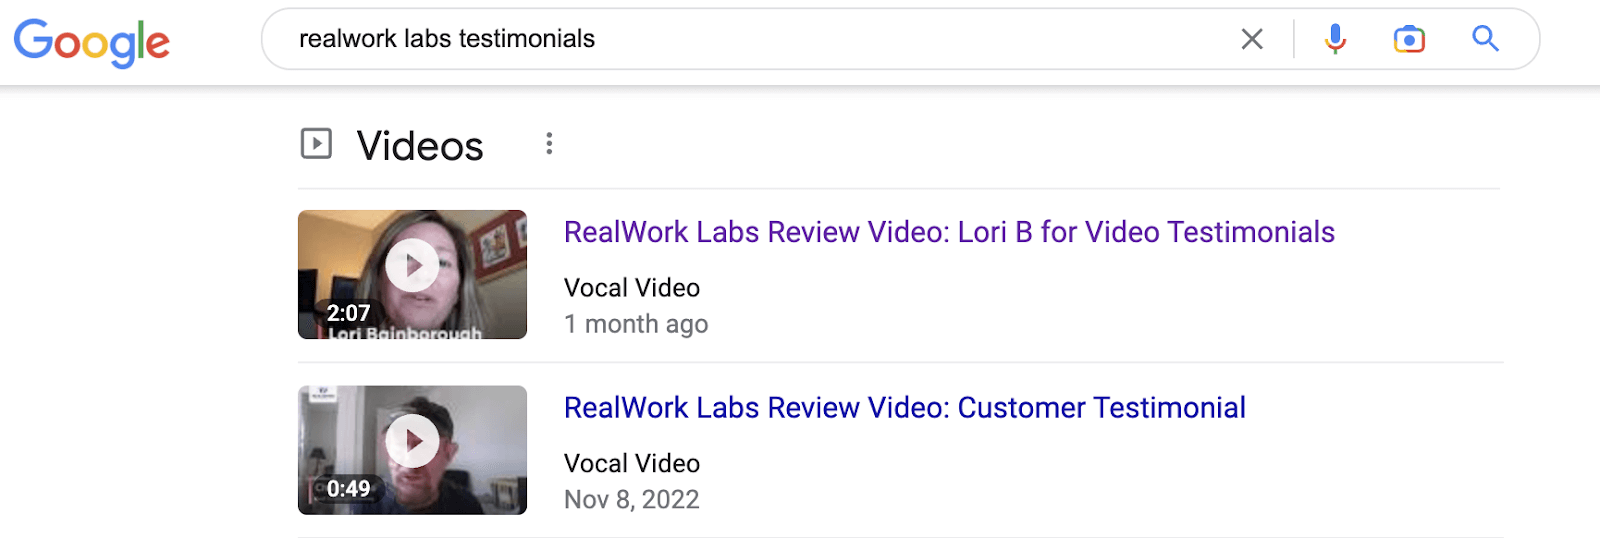 Realwork Labs testimonial SERP.